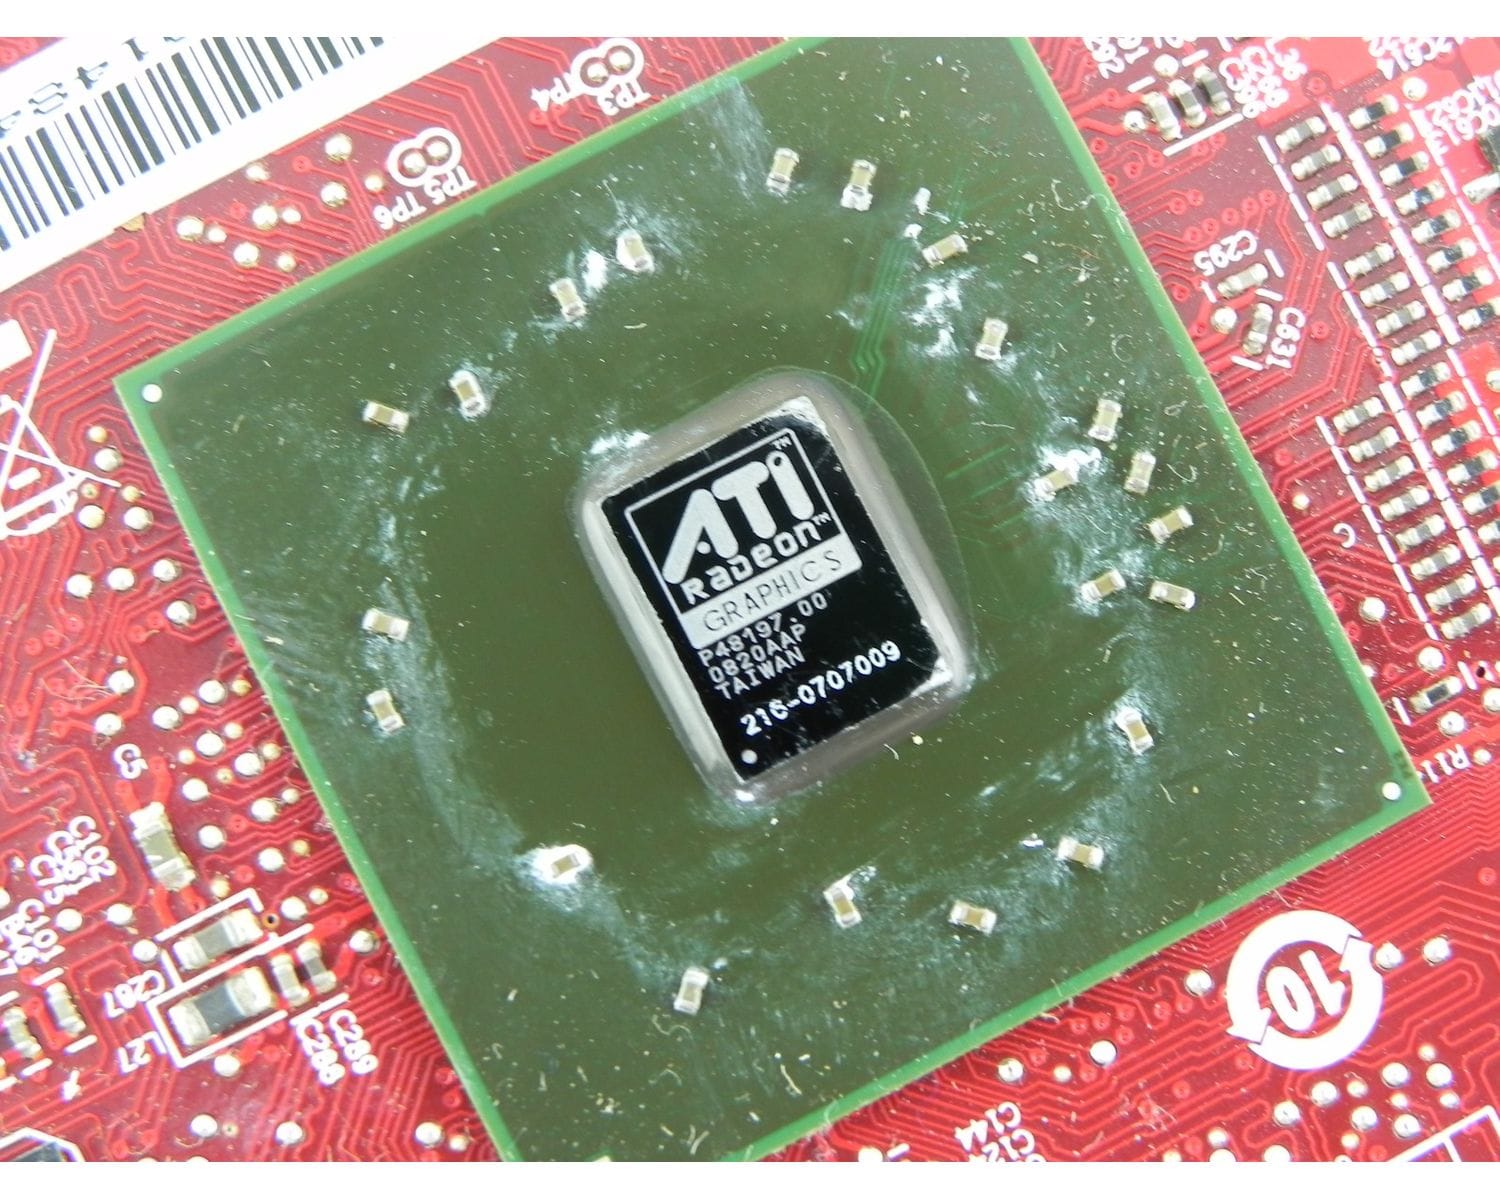 Ati mobility radeon купить. 216-0707009 Чип. ATI Mobility Radeon 2 Duo 3470.